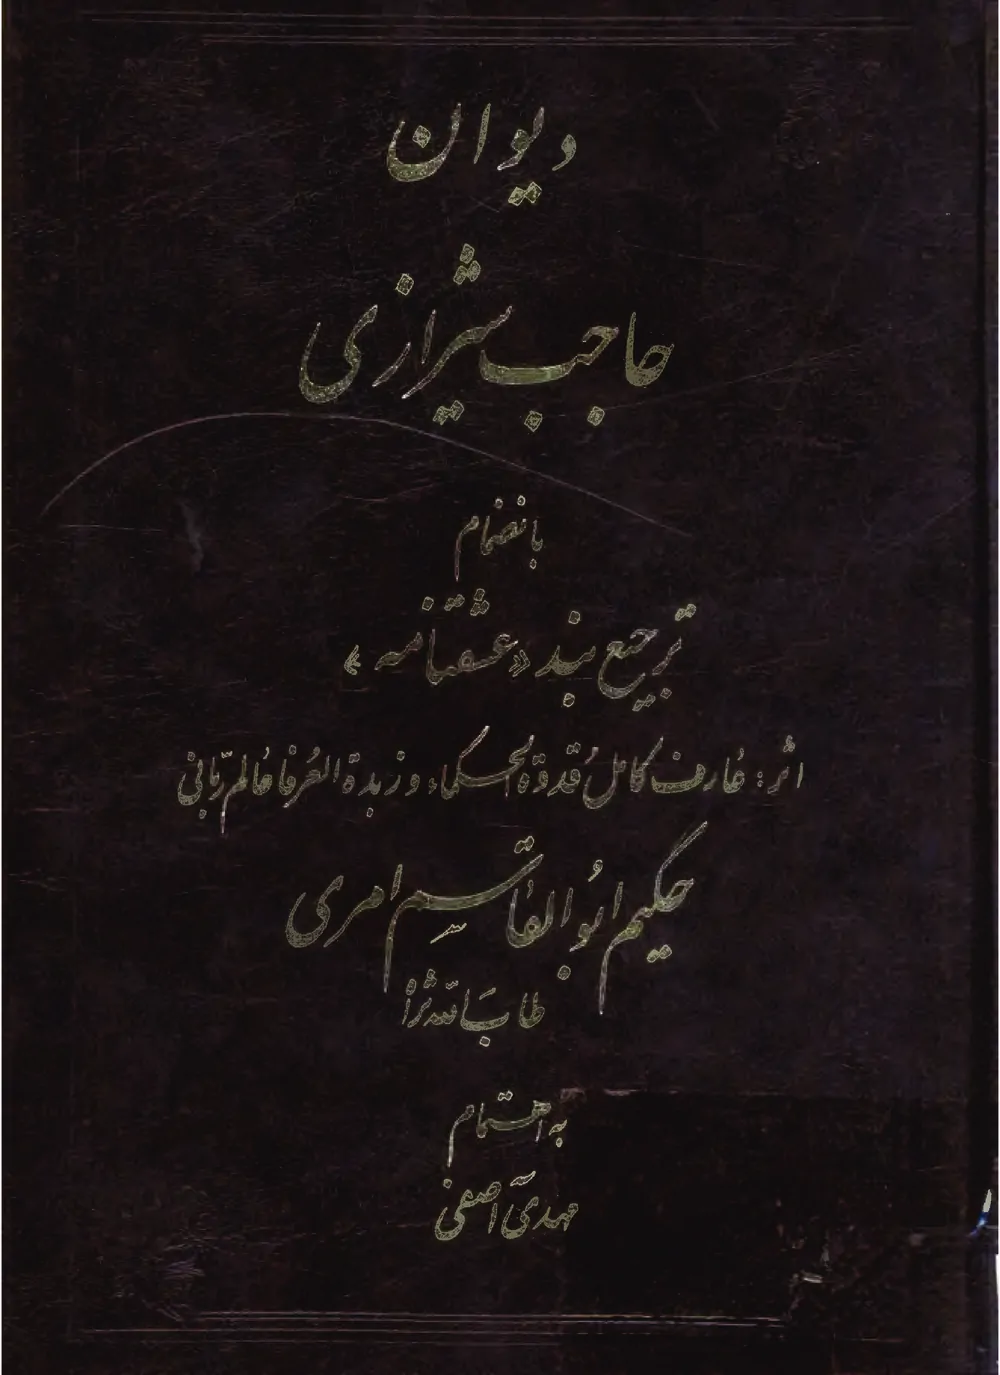 دیوان حاجب شیرازی